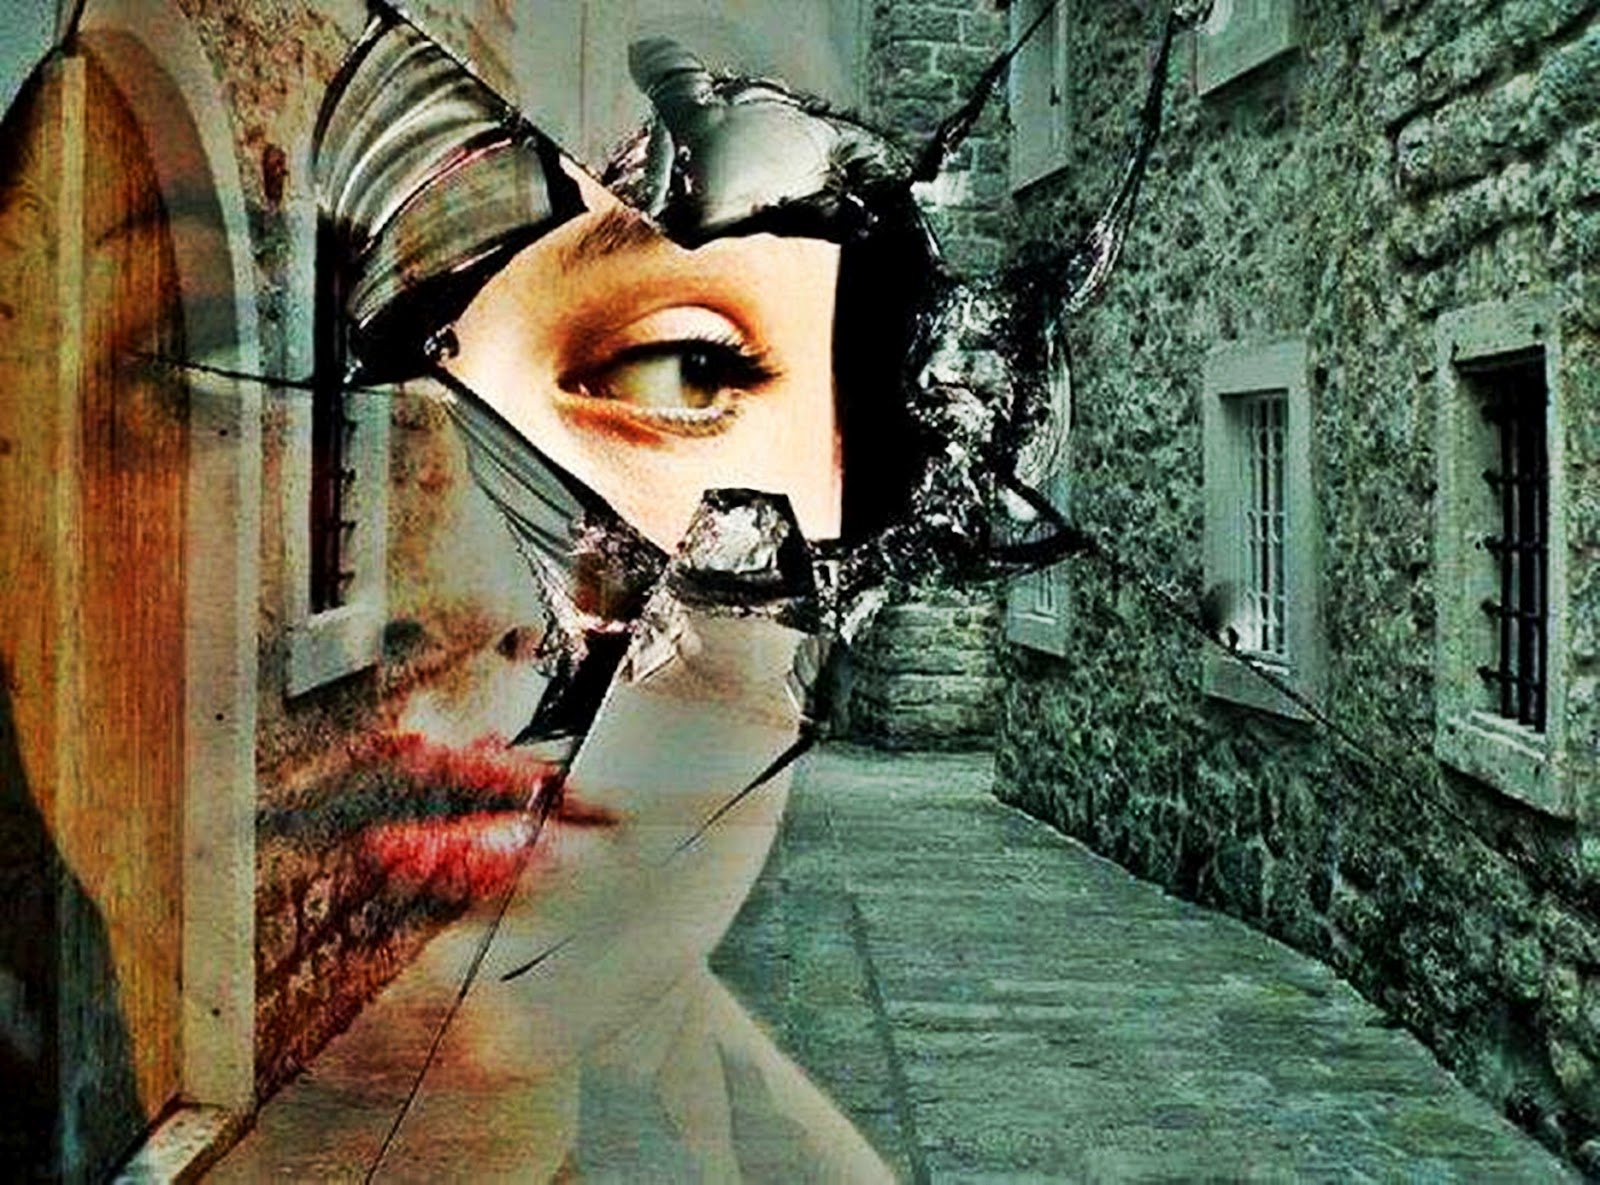 Я видела с другой тебя в осколки. Отражение в зеркале сюрреализм. Лицо в разбитом зеркале. Сюрреализм маски. Глаз в разбитом зеркале.